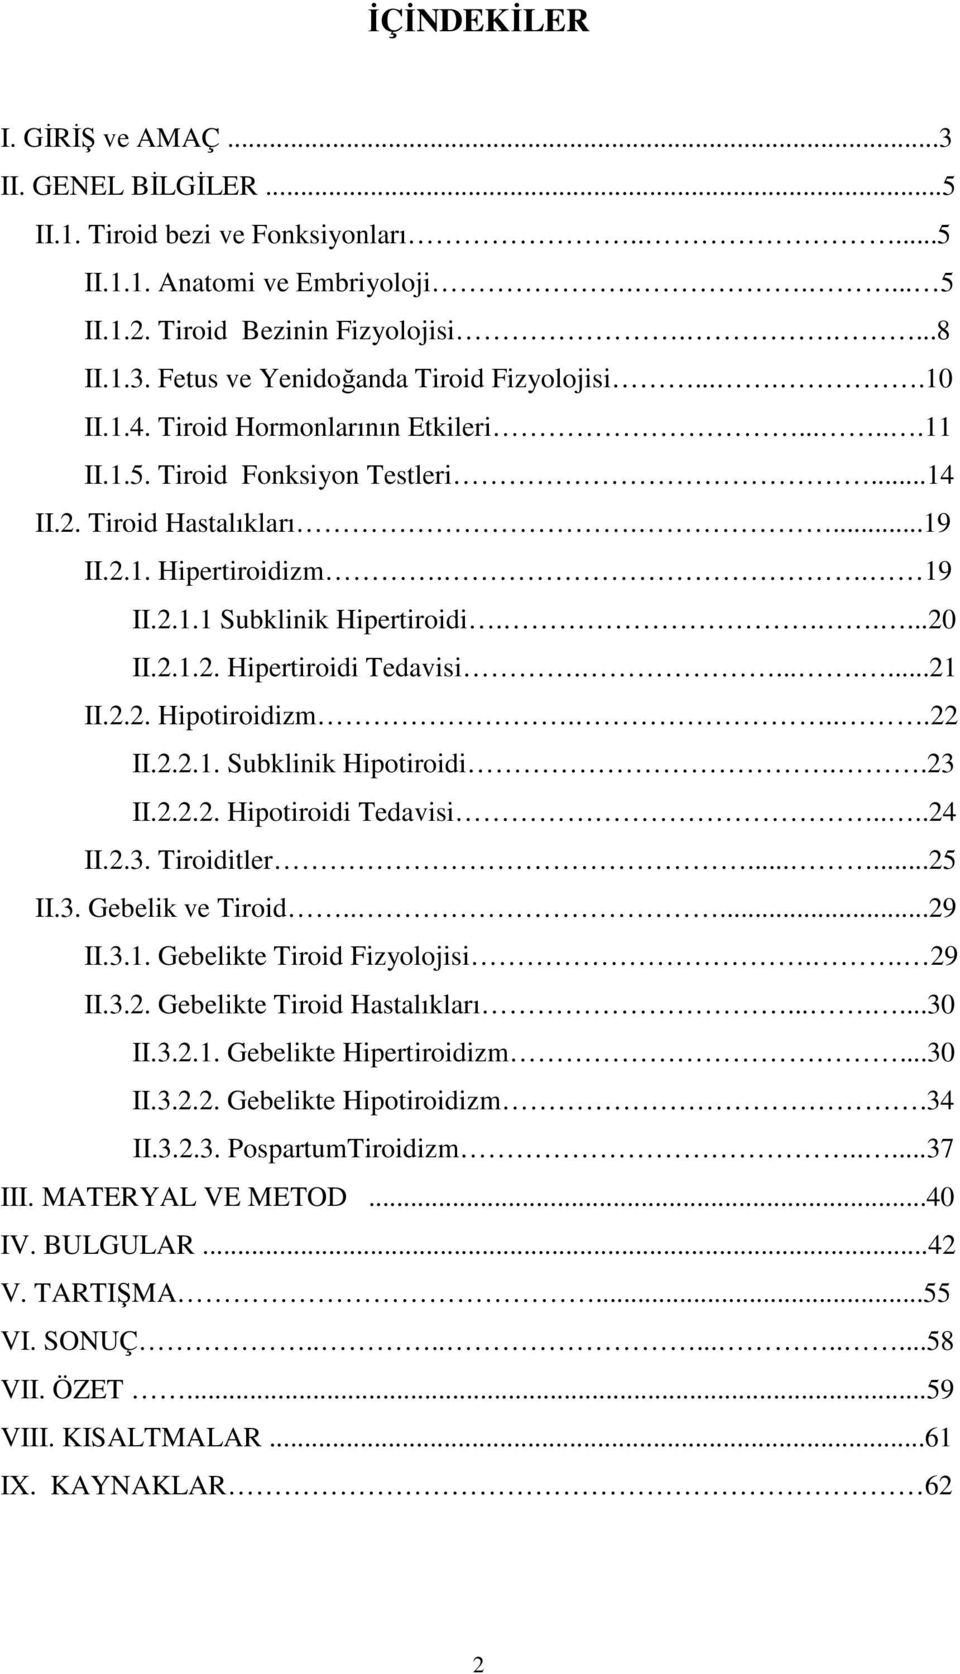 .......21 II.2.2. Hipotiroidizm....22 II.2.2.1. Subklinik Hipotiroidi..23 II.2.2.2. Hipotiroidi Tedavisi....24 II.2.3. Tiroiditler......25 II.3. Gebelik ve Tiroid.....29 II.3.1. Gebelikte Tiroid Fizyolojisi.